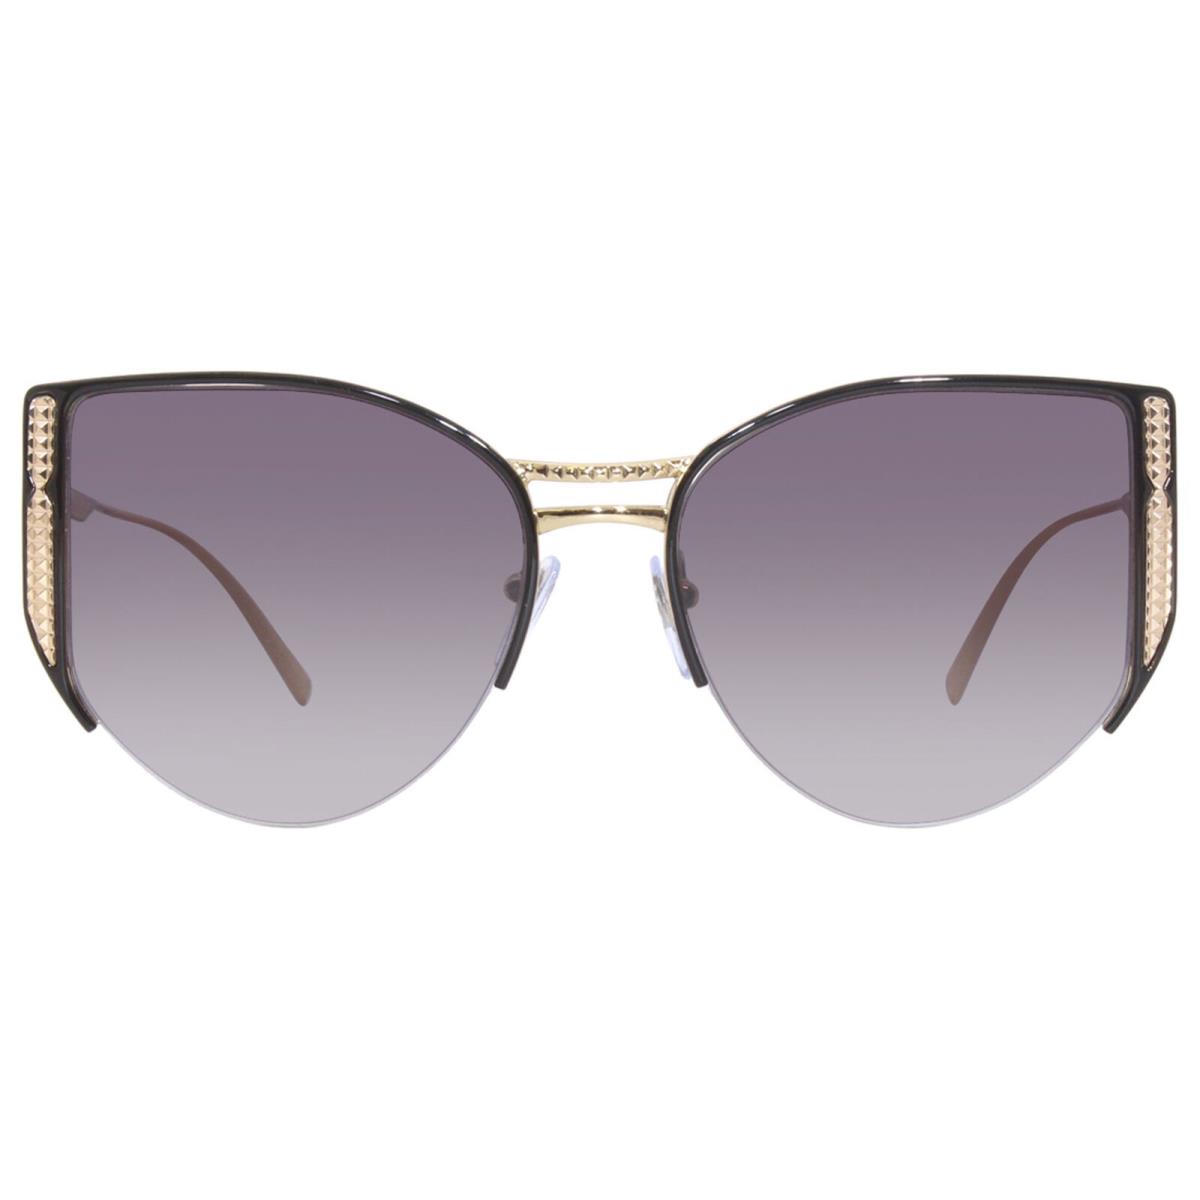 Bvlgari 6170 2023/8G Sunglasses Women`s Pink Gold-black/grey Gradient Lens 55mm